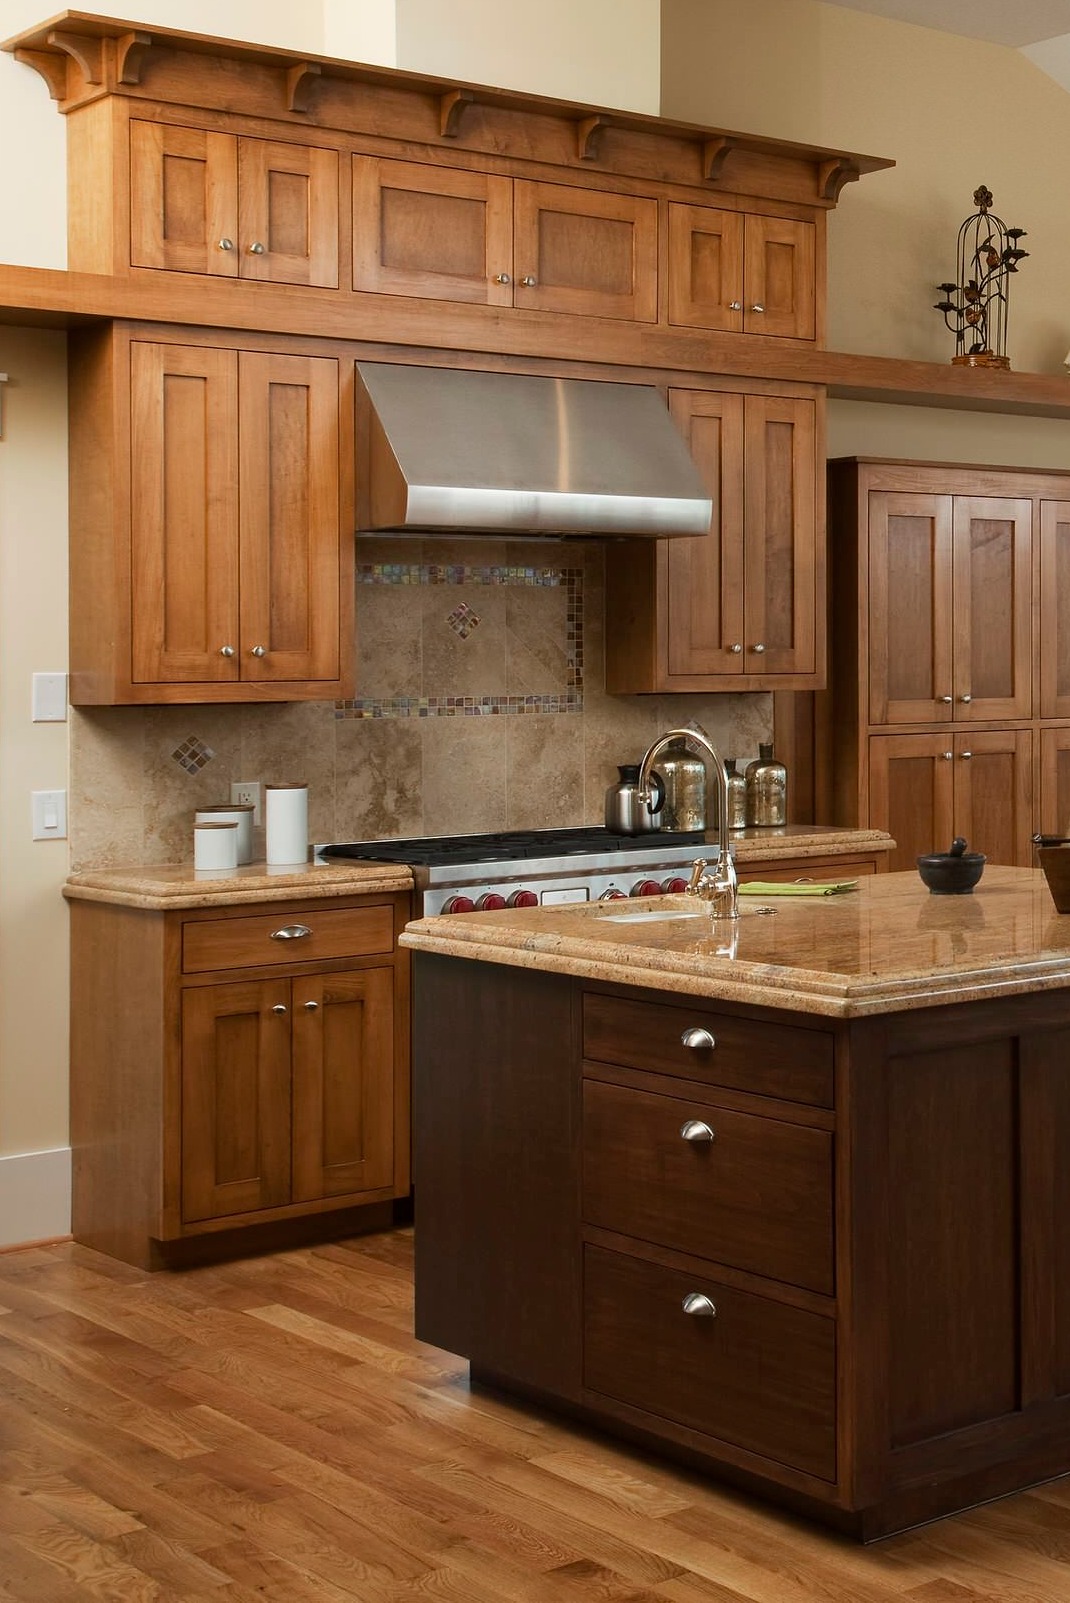 Brown Kitchen Cabinets Madura Gold Granite Countertops Travertine Backsplash Tiles Hardwood Floor